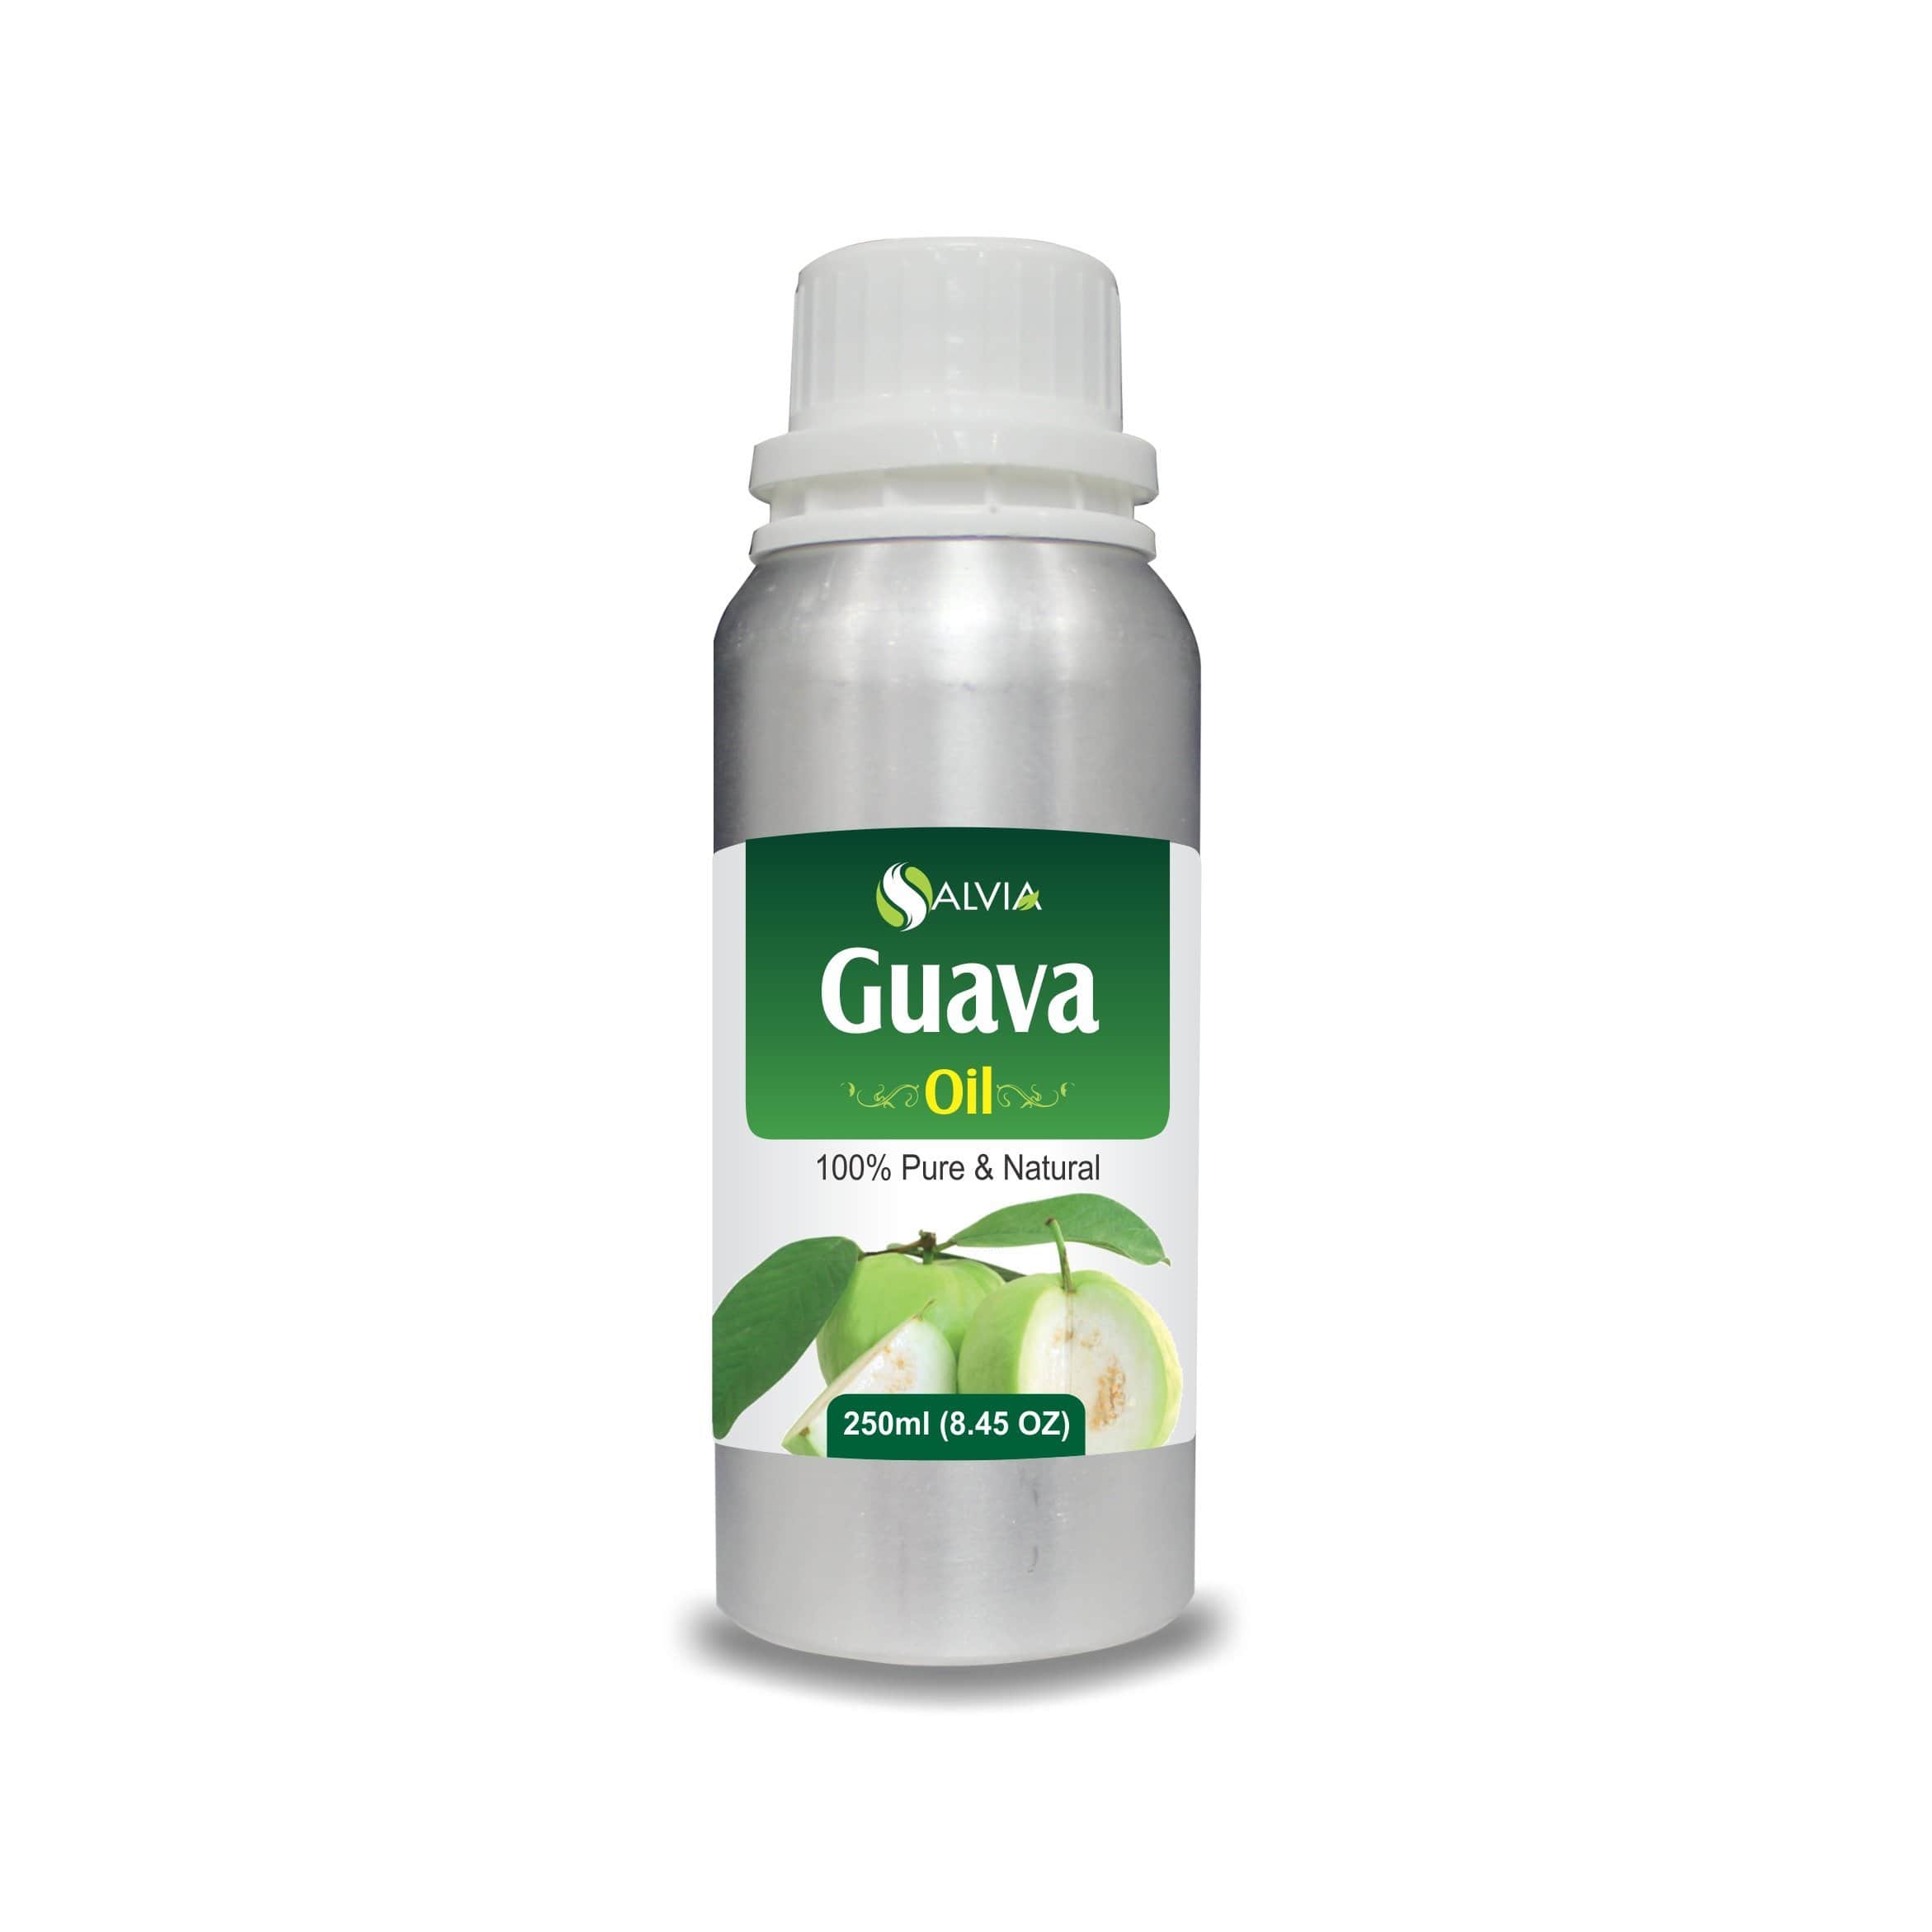 guava oil benefits